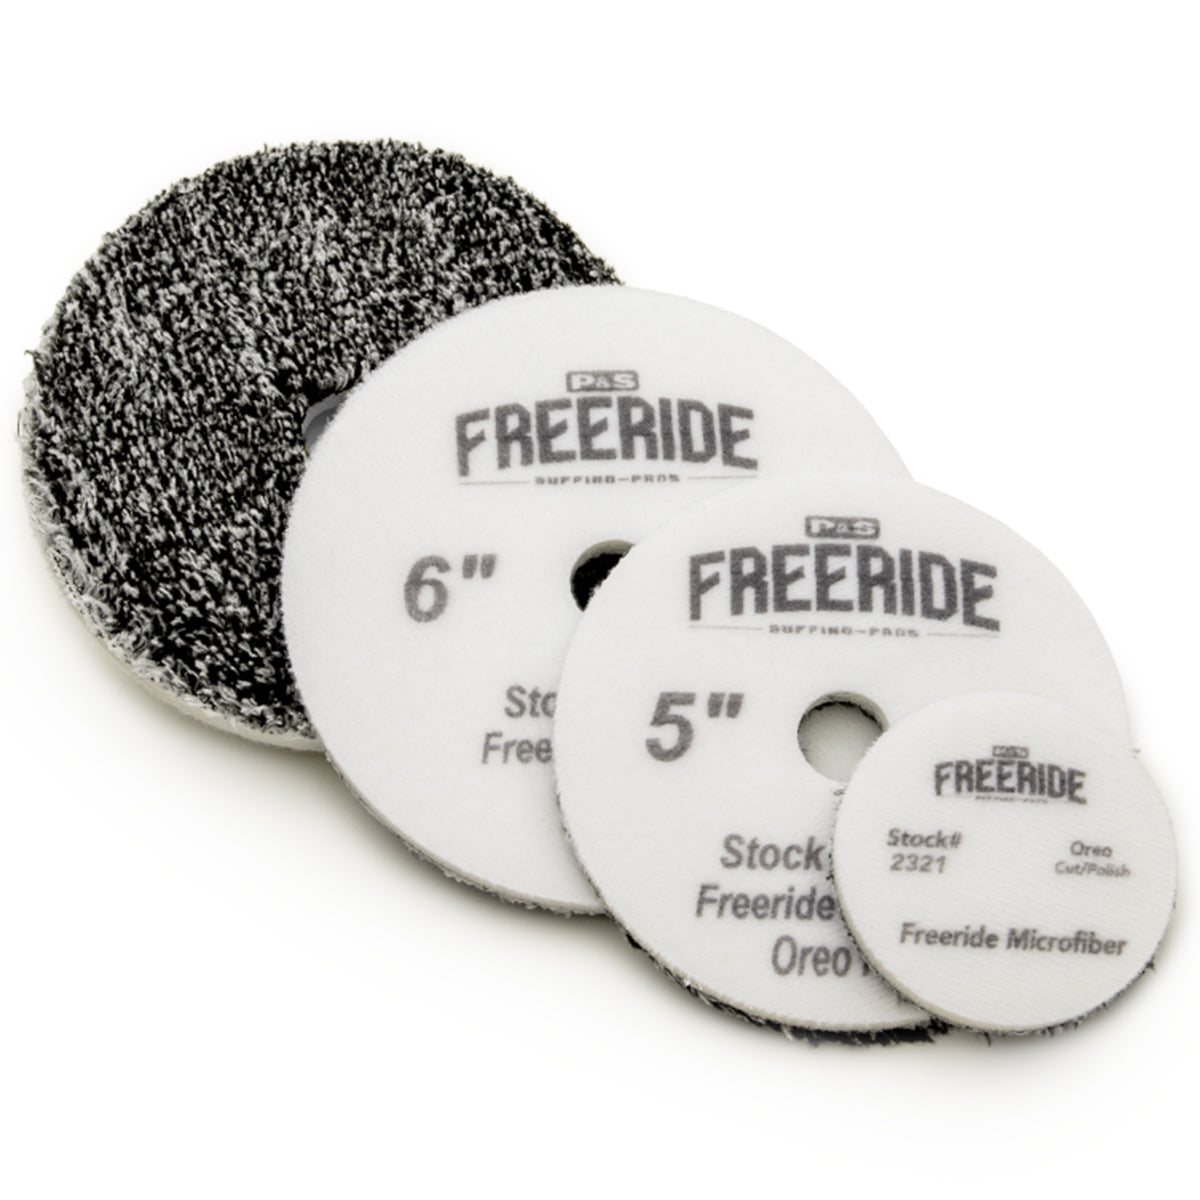 P&S DB Freeride Foam Oreo Microfiber Cut / Polish Pad